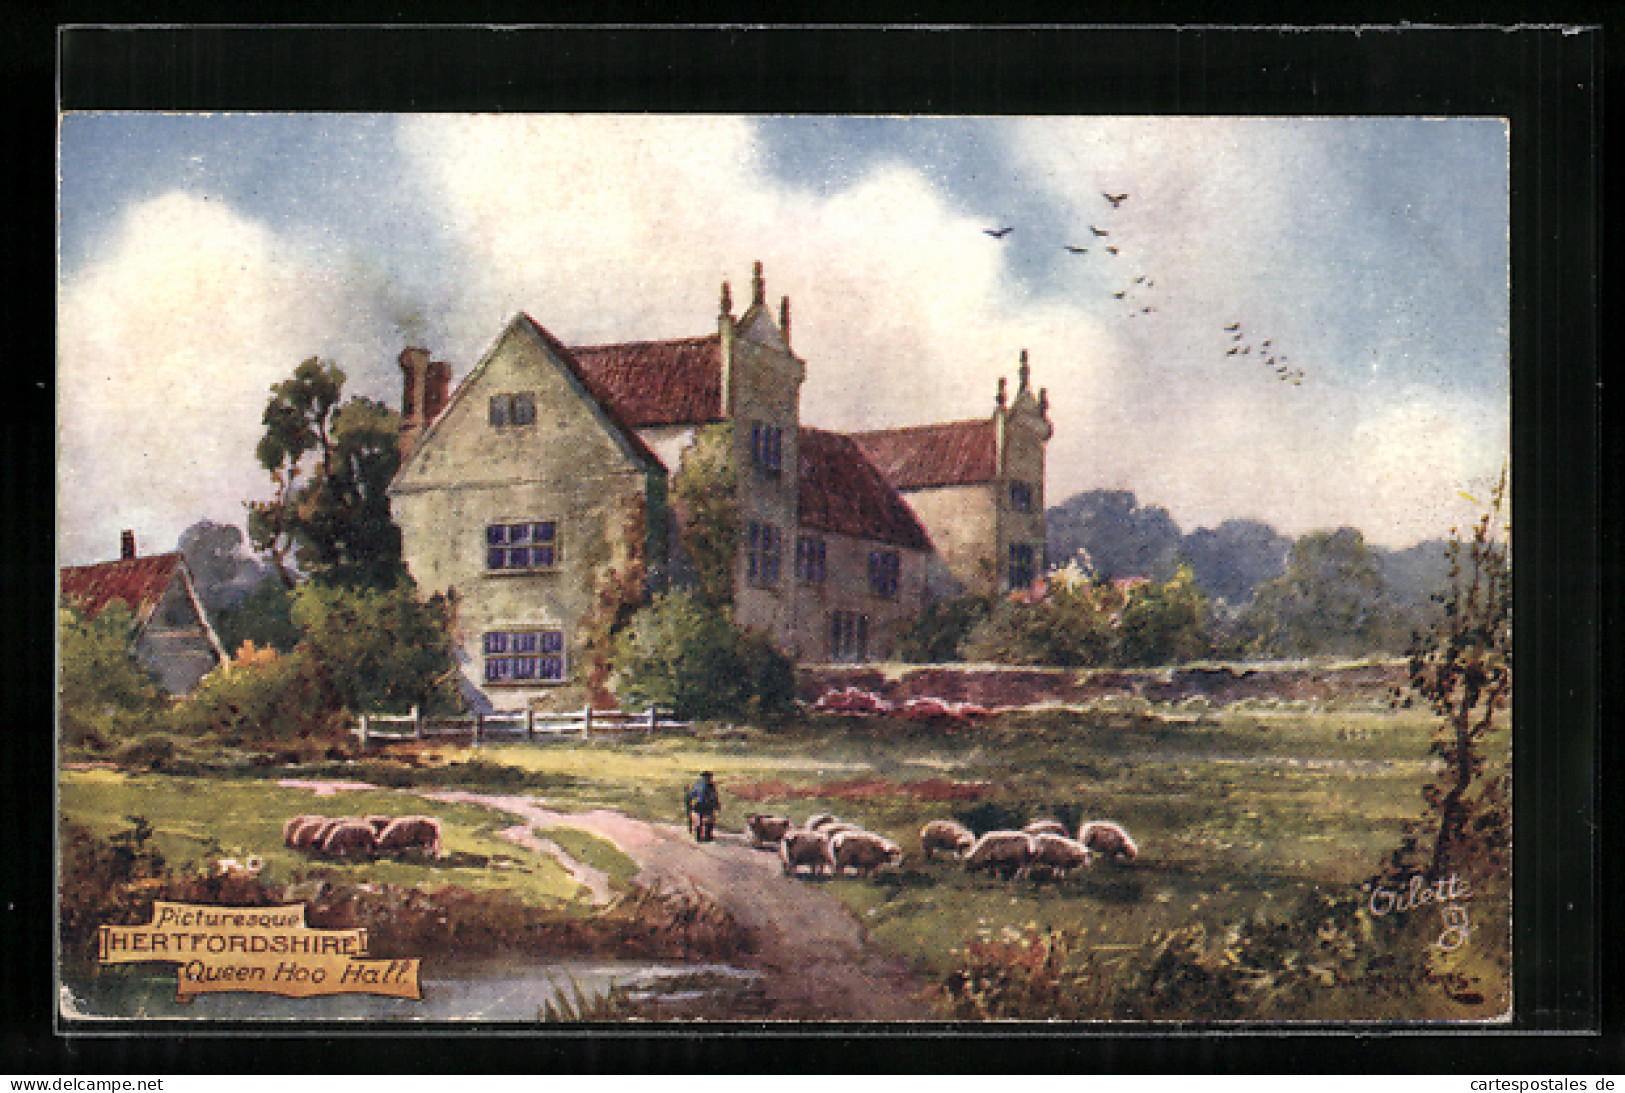 Künstler-AK Raphael Tuck & Sons Nr. 7425: Hertfordshire, Queen Hoo Hall  - Tuck, Raphael